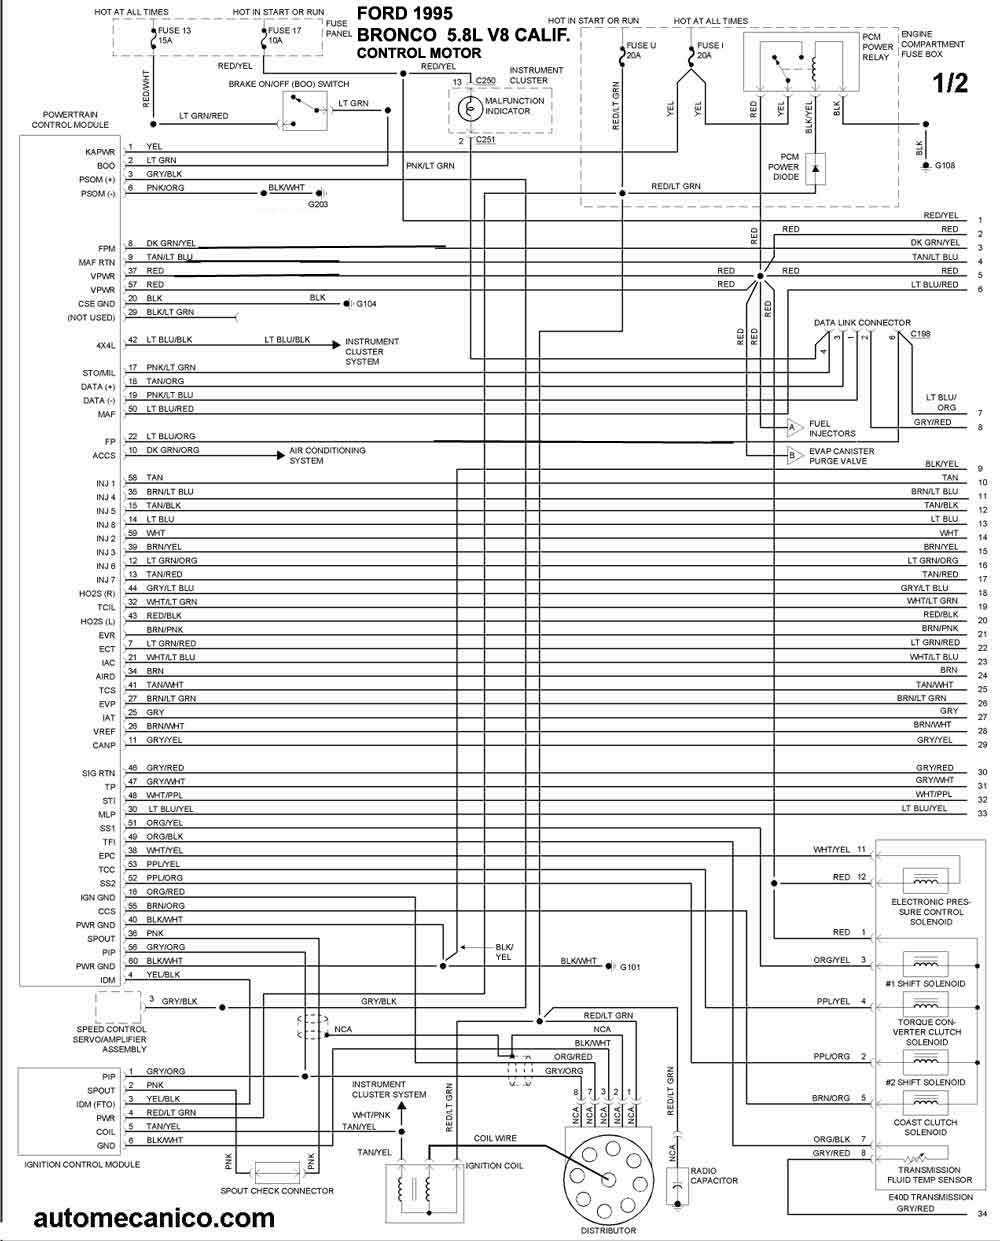 diagrama de transmision automatica